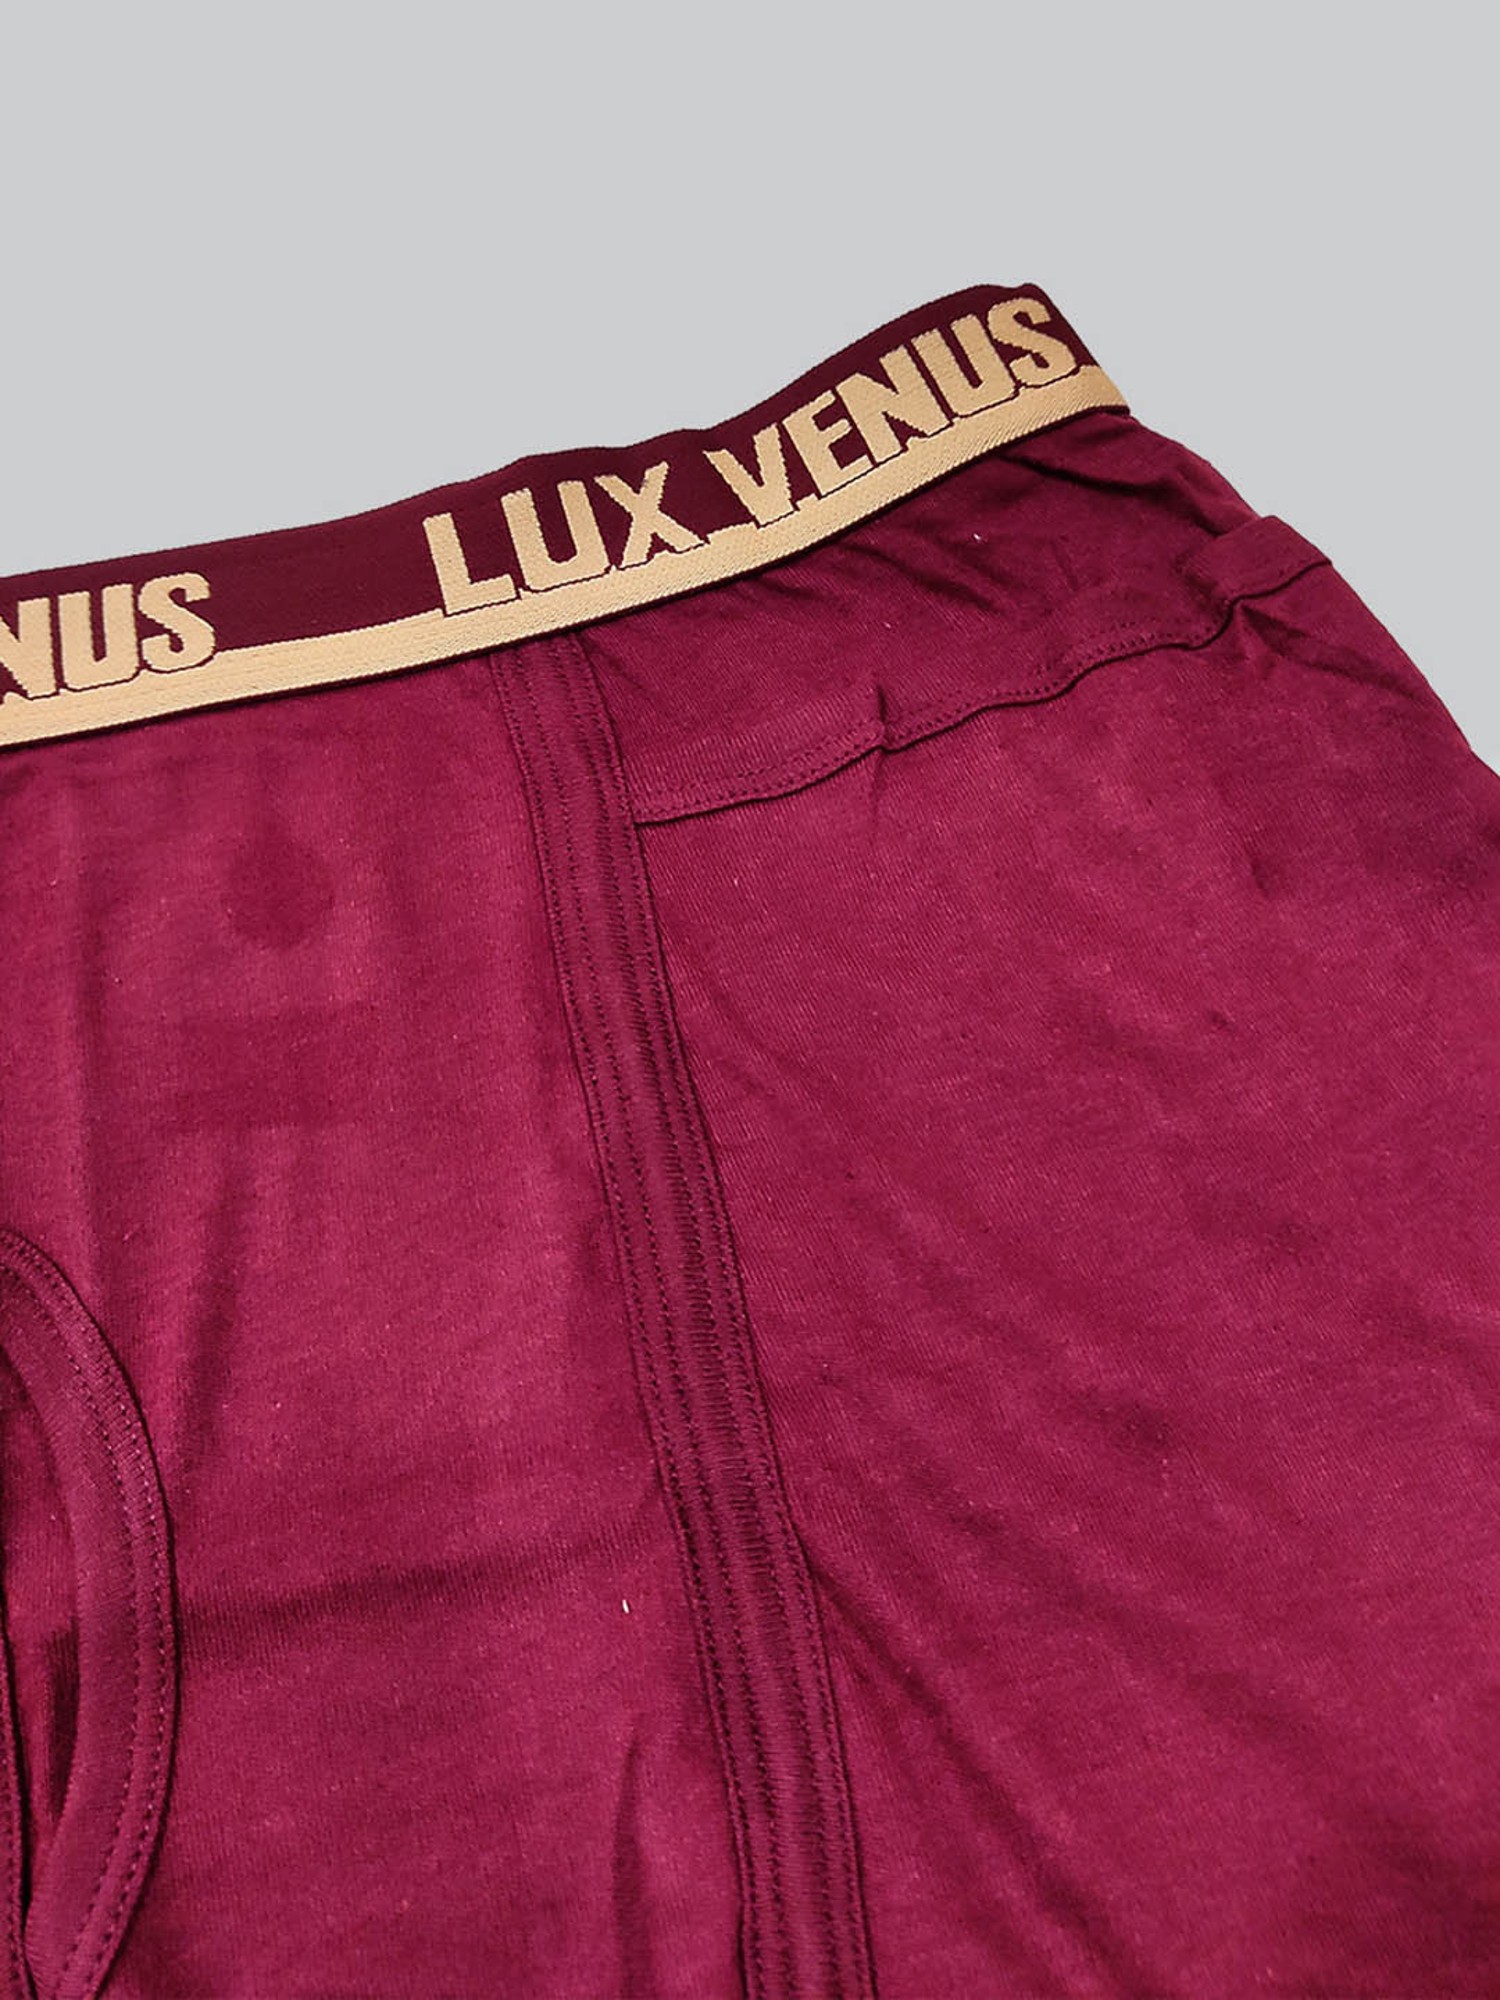 Buy LUX Venus Assorted Cotton Pocket Trunks - Pack of 6 for Men's